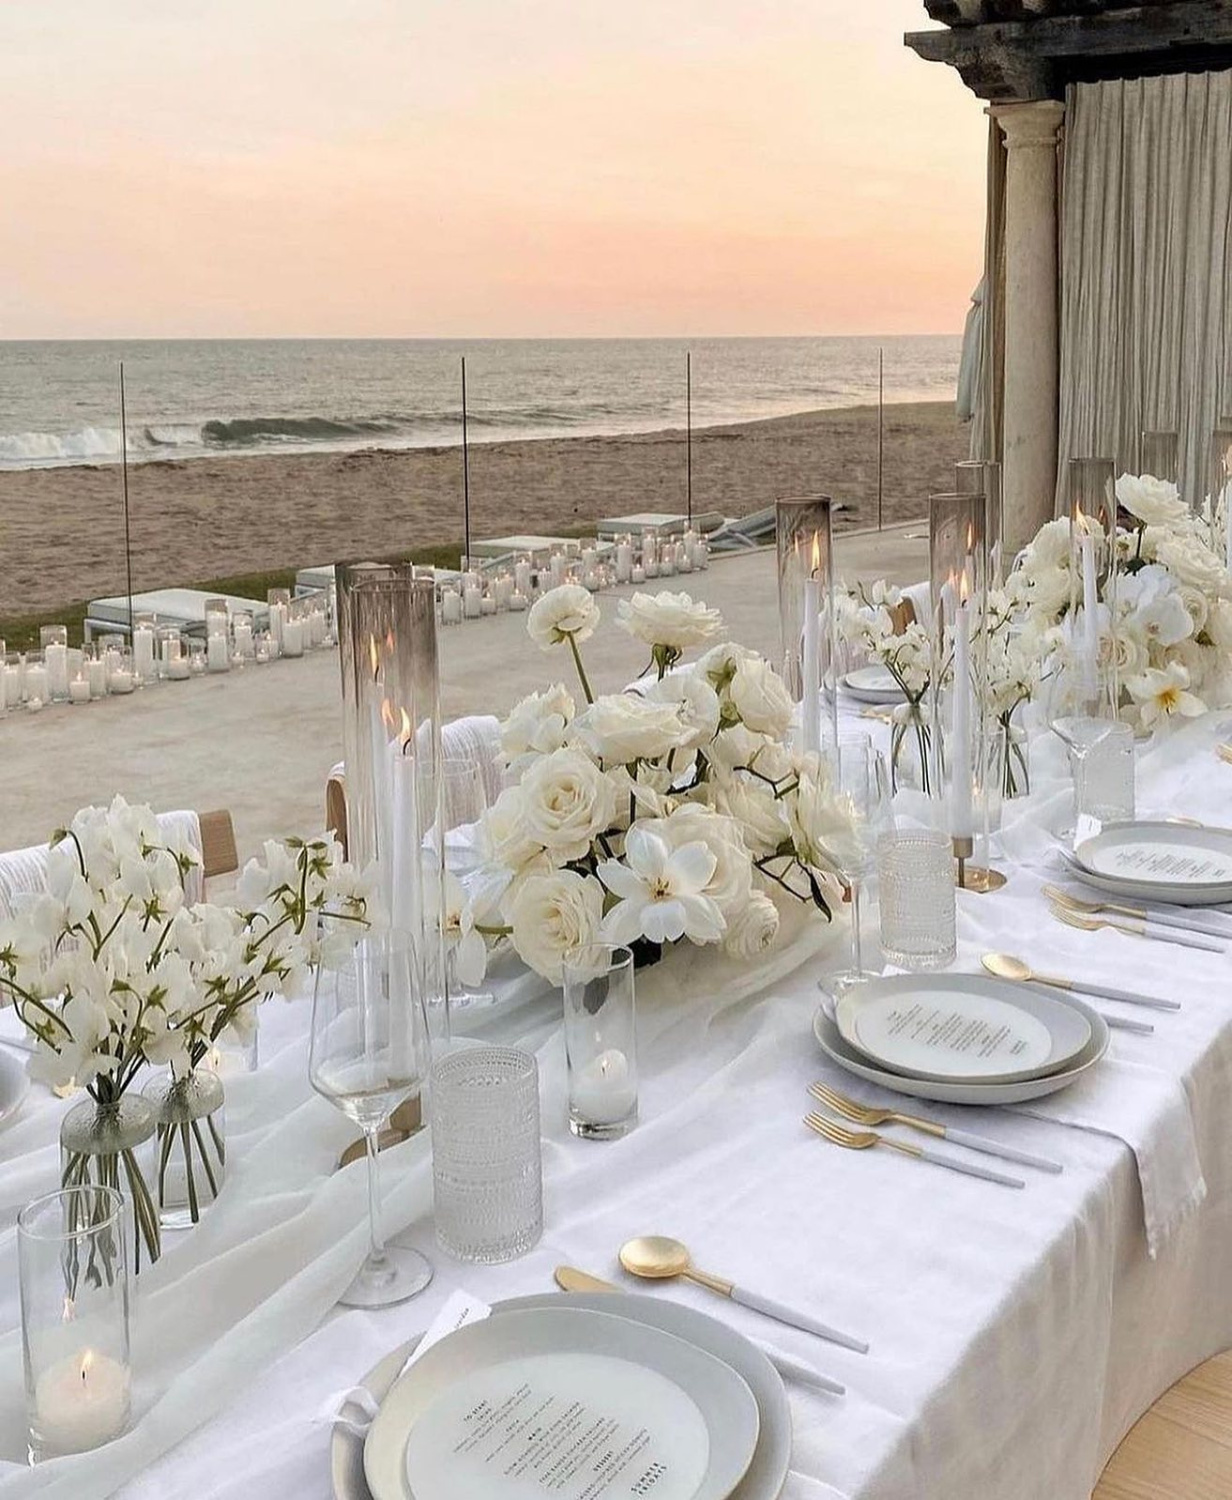 Фото ресторана для свадьбы с видом на море.